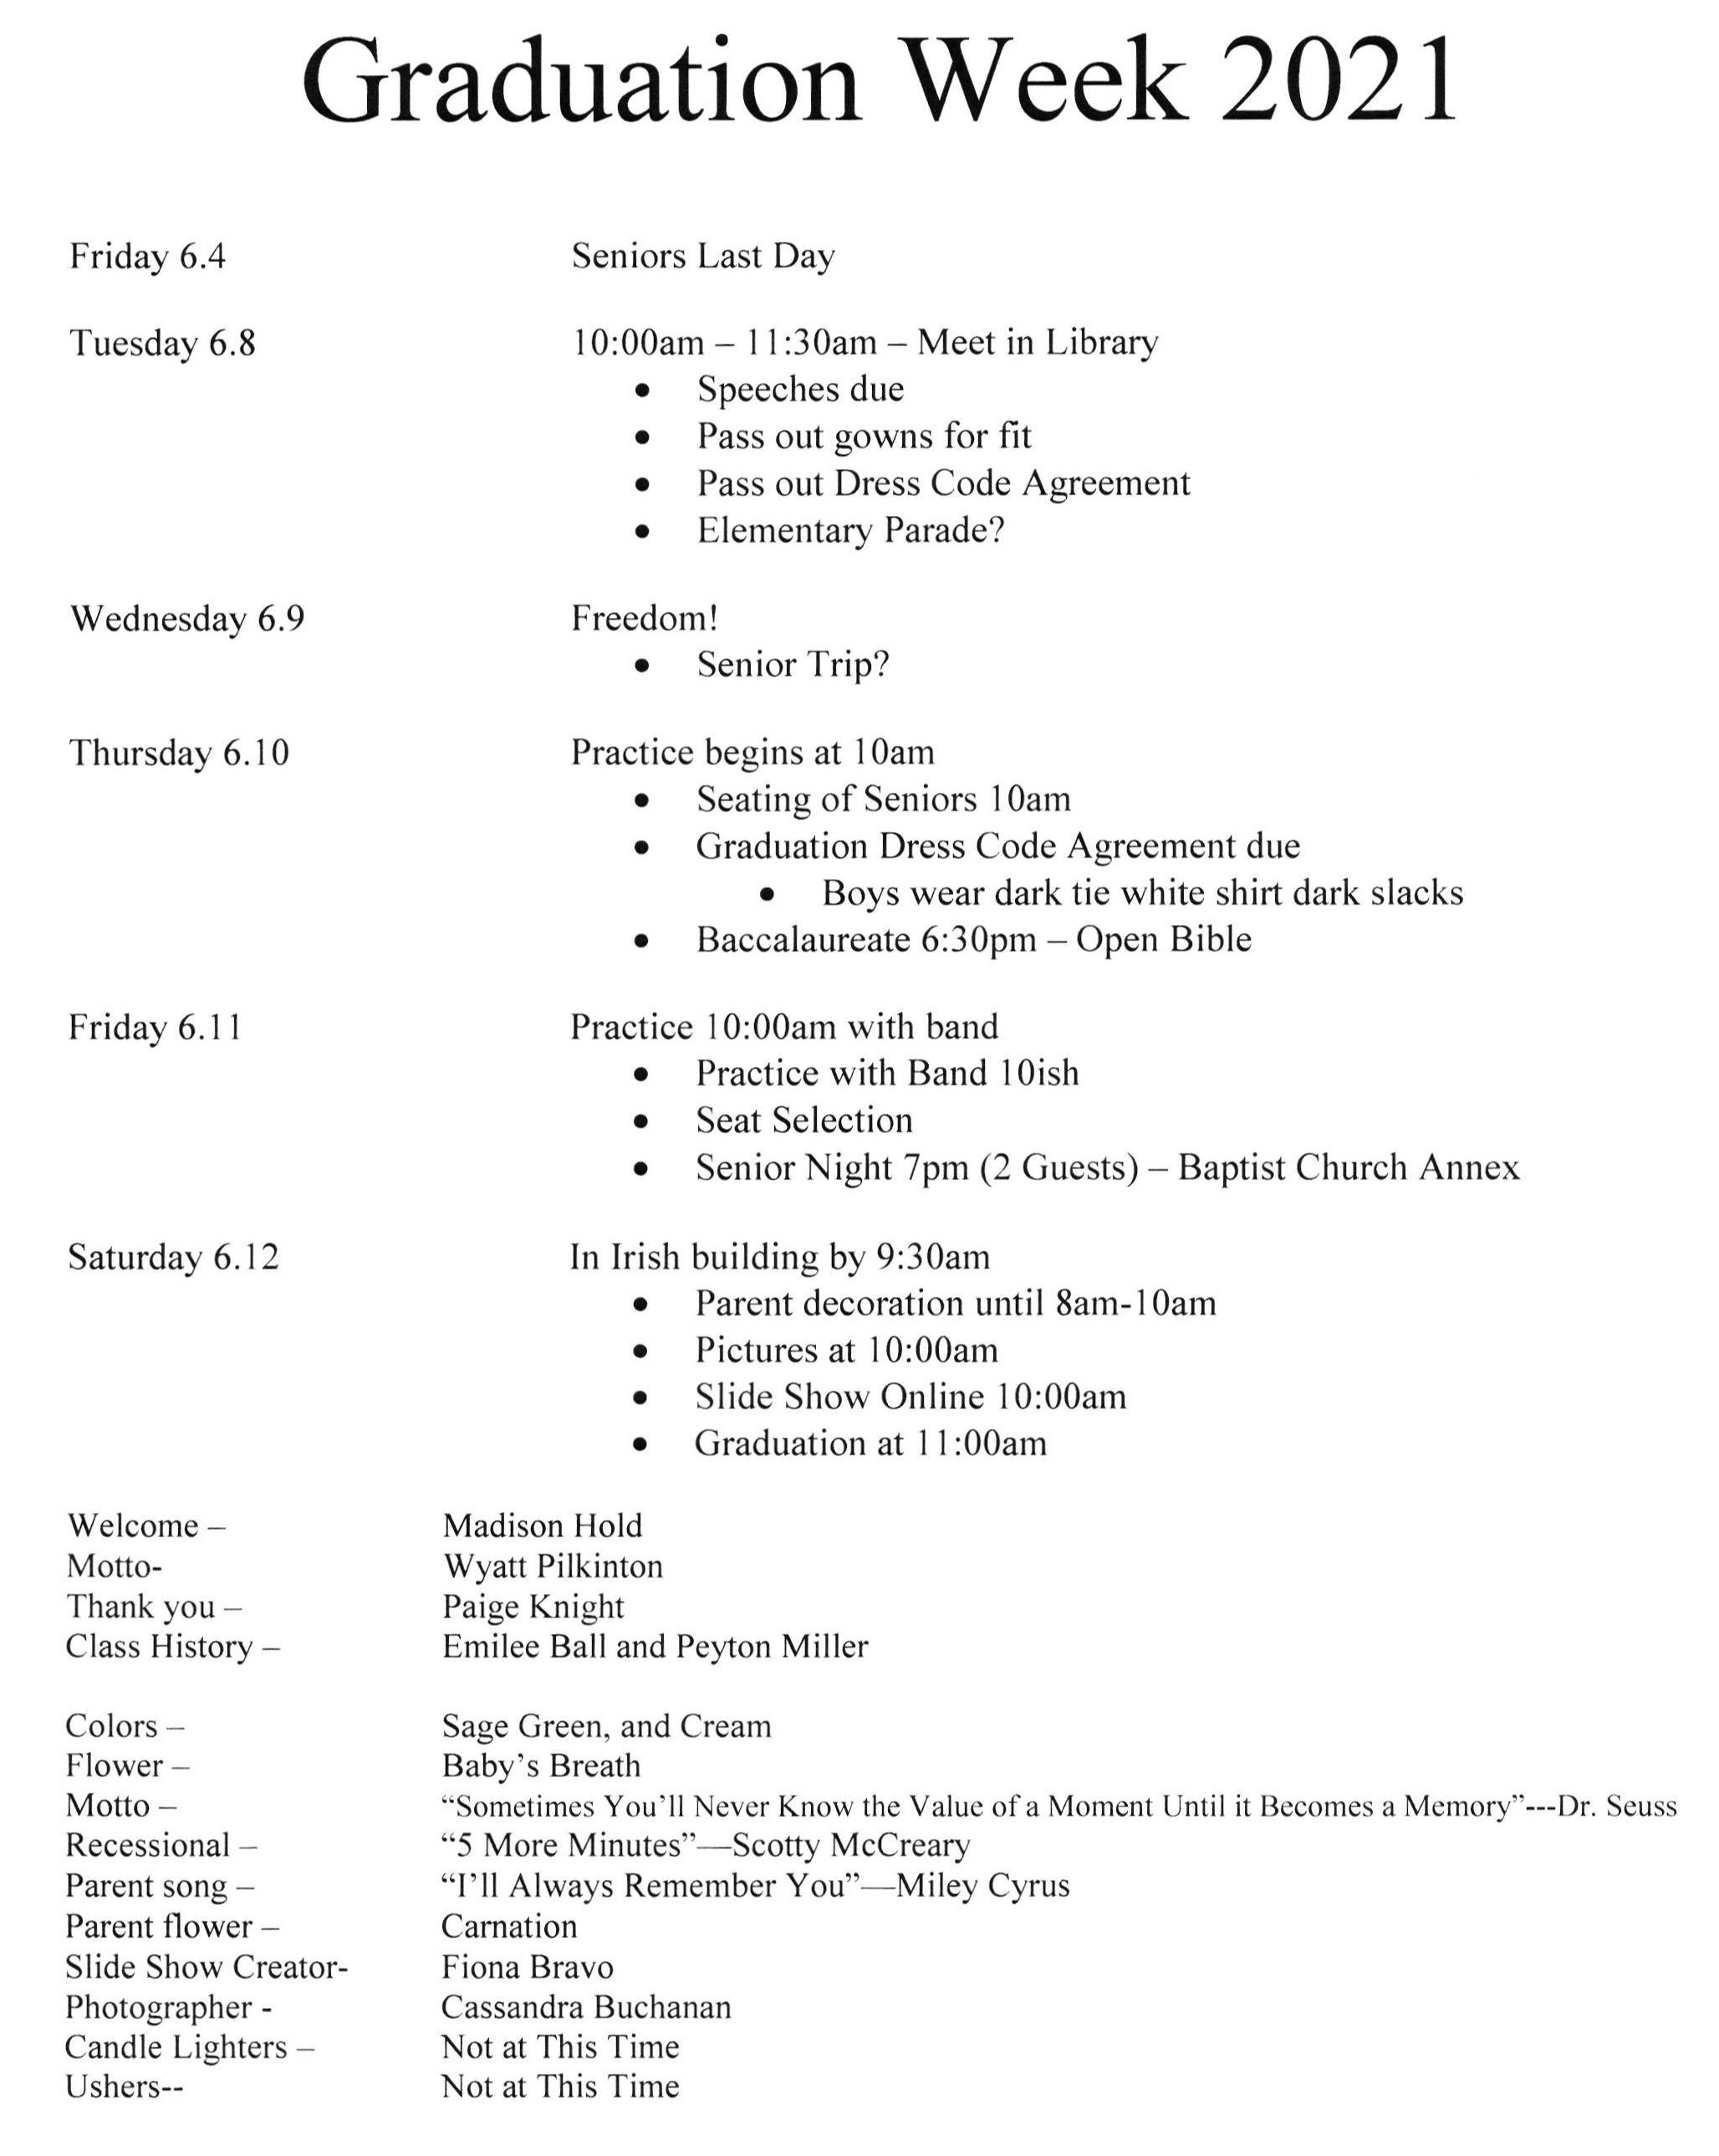 Graduation Week Schedule